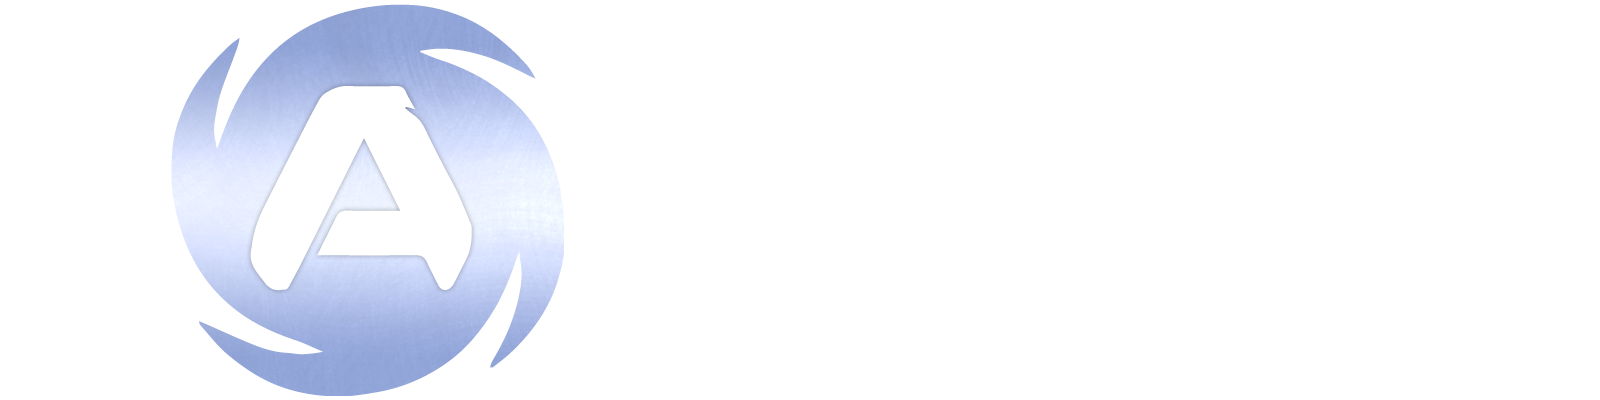 mtg-arena-zone-logo